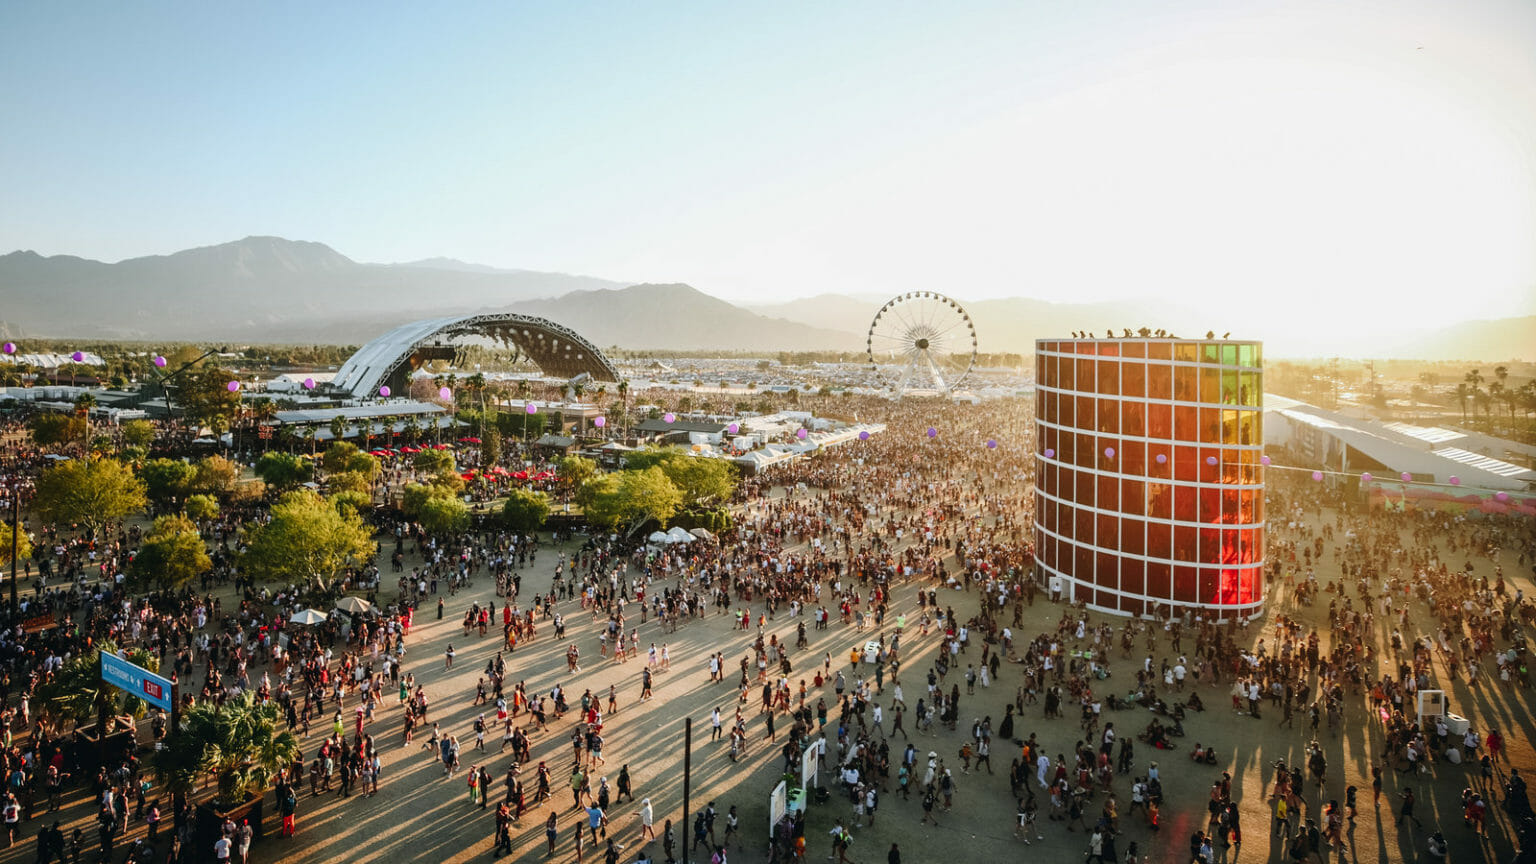 Coachella introduces massive electronic lineup for 2023 Dancing Astronaut